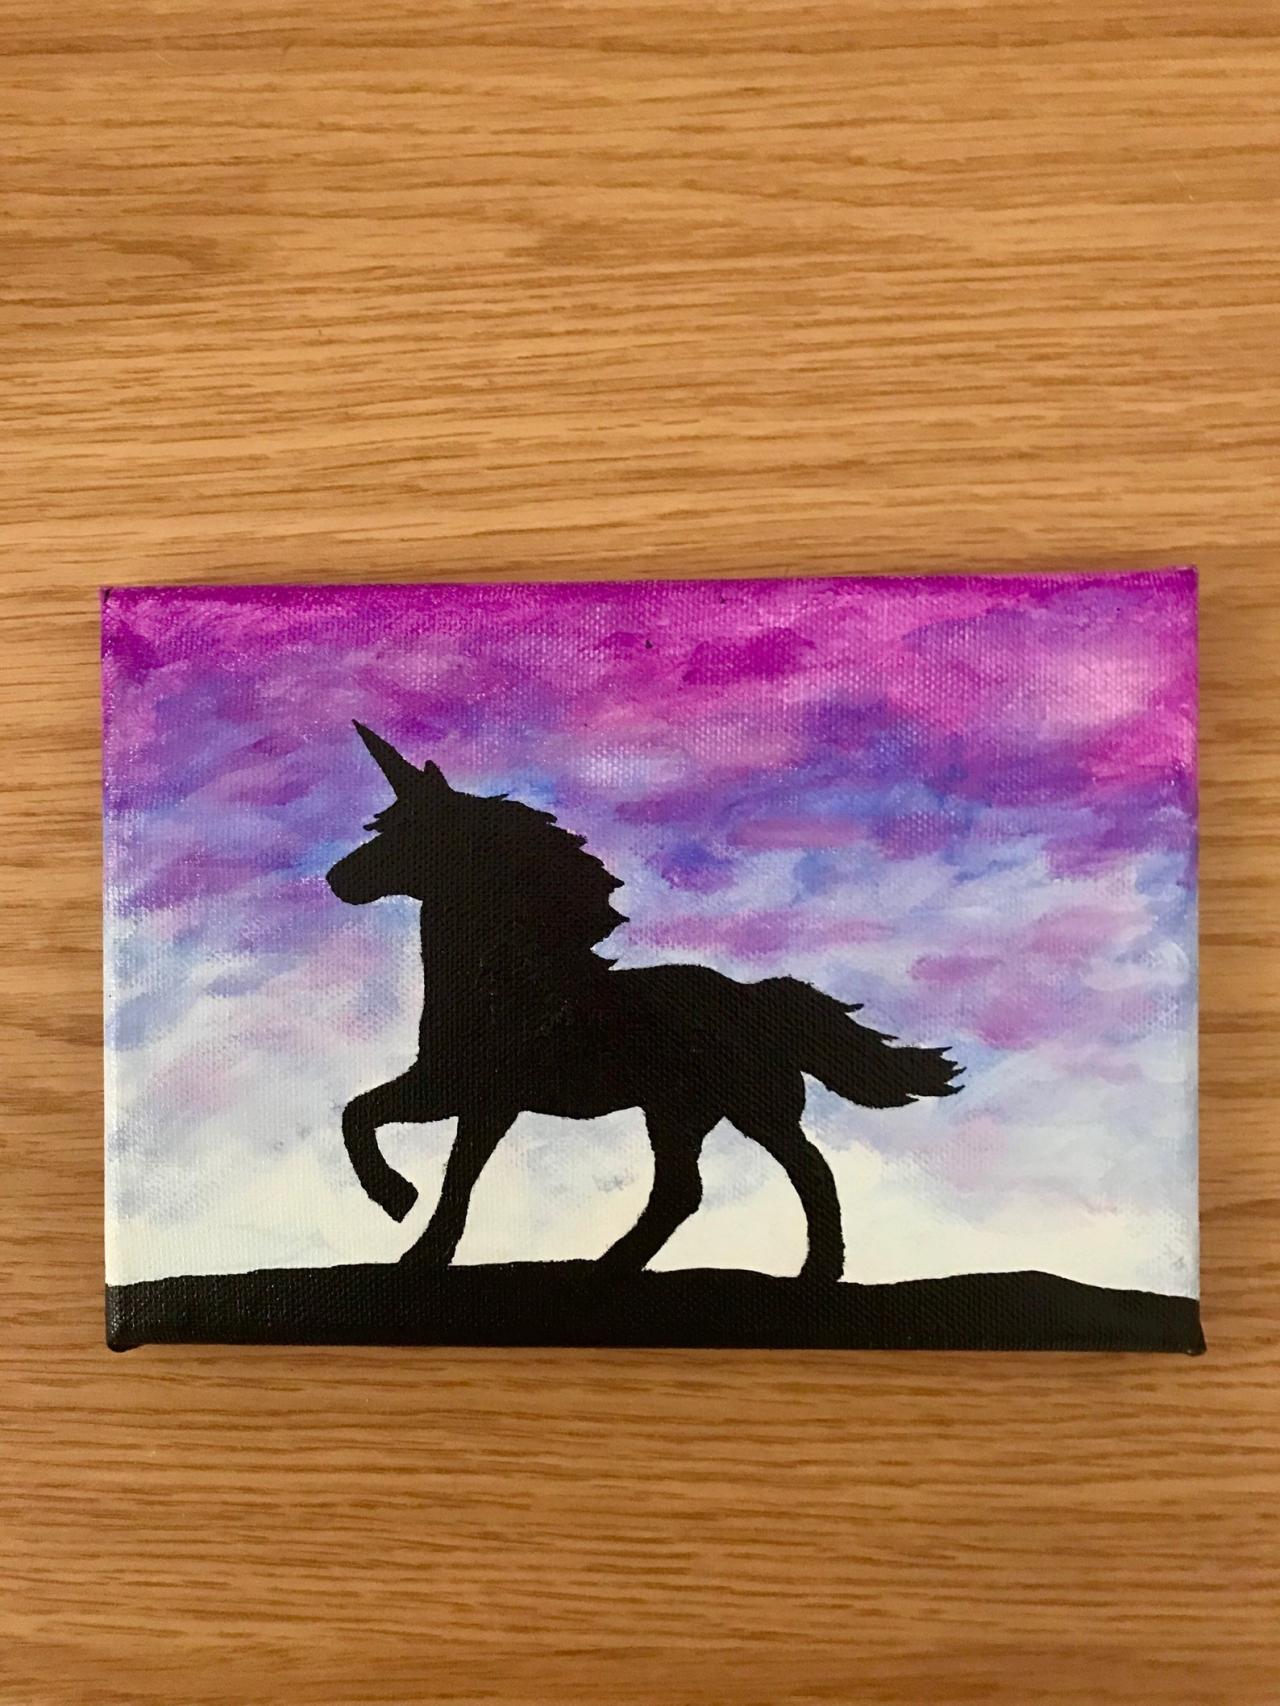 Unicorn sunset painting on canvas